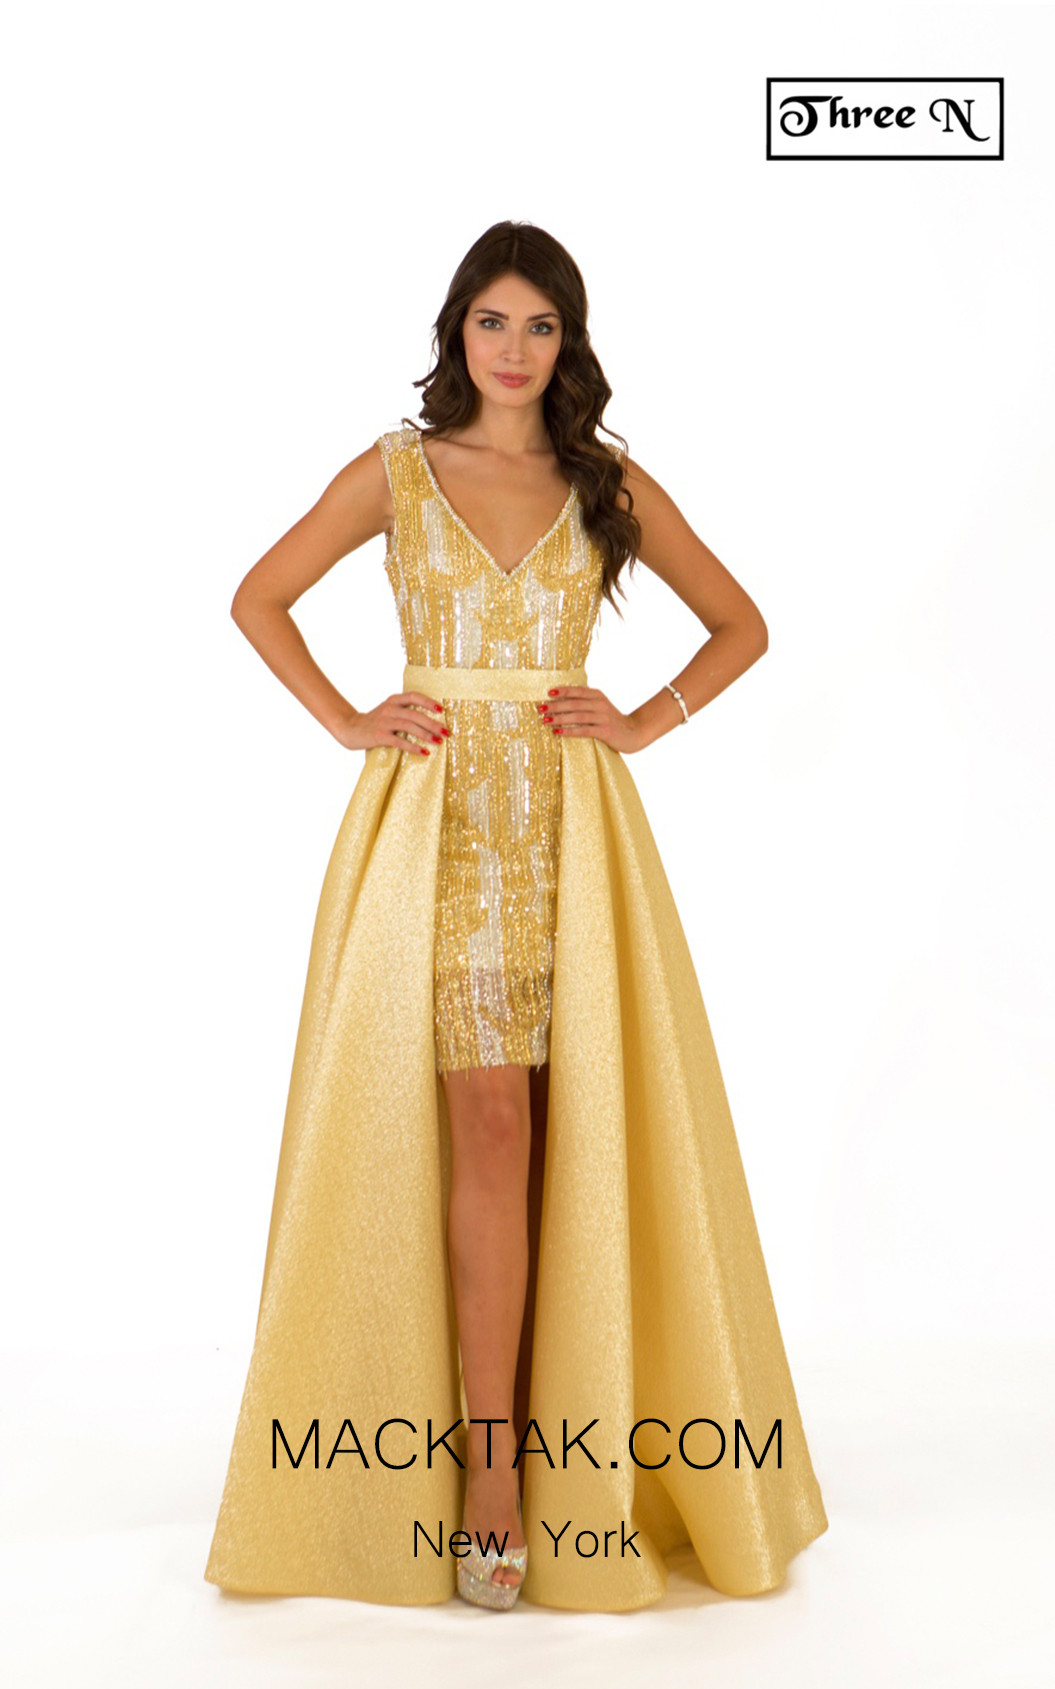 Three N 1891 Gold Front Dress